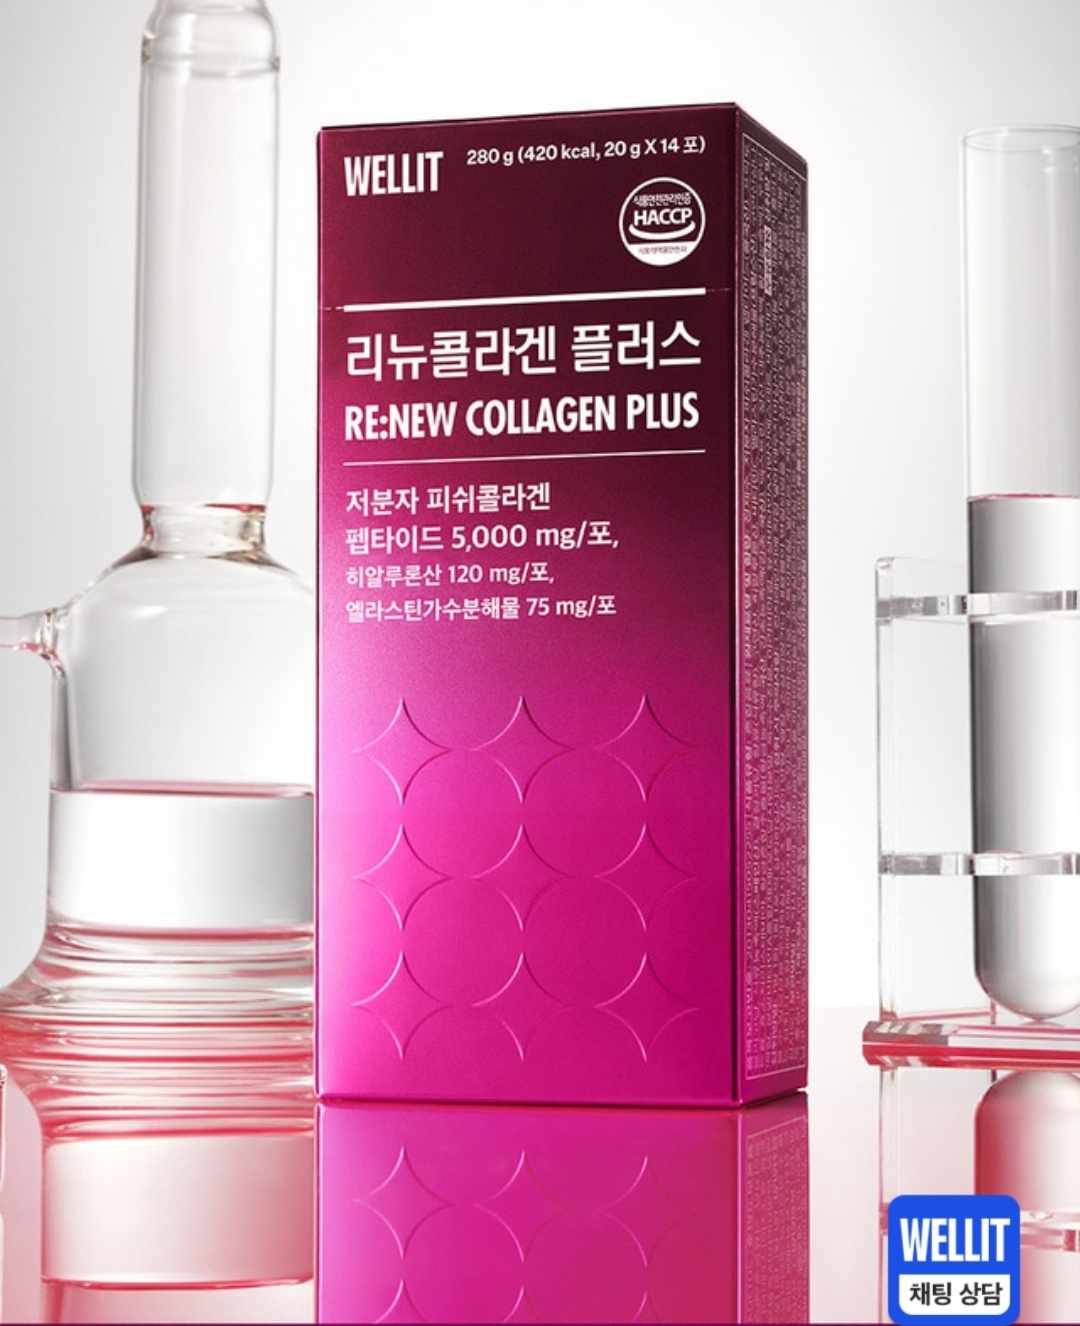 Wellit Re New Collagen Plus - 20g x 14 sachets